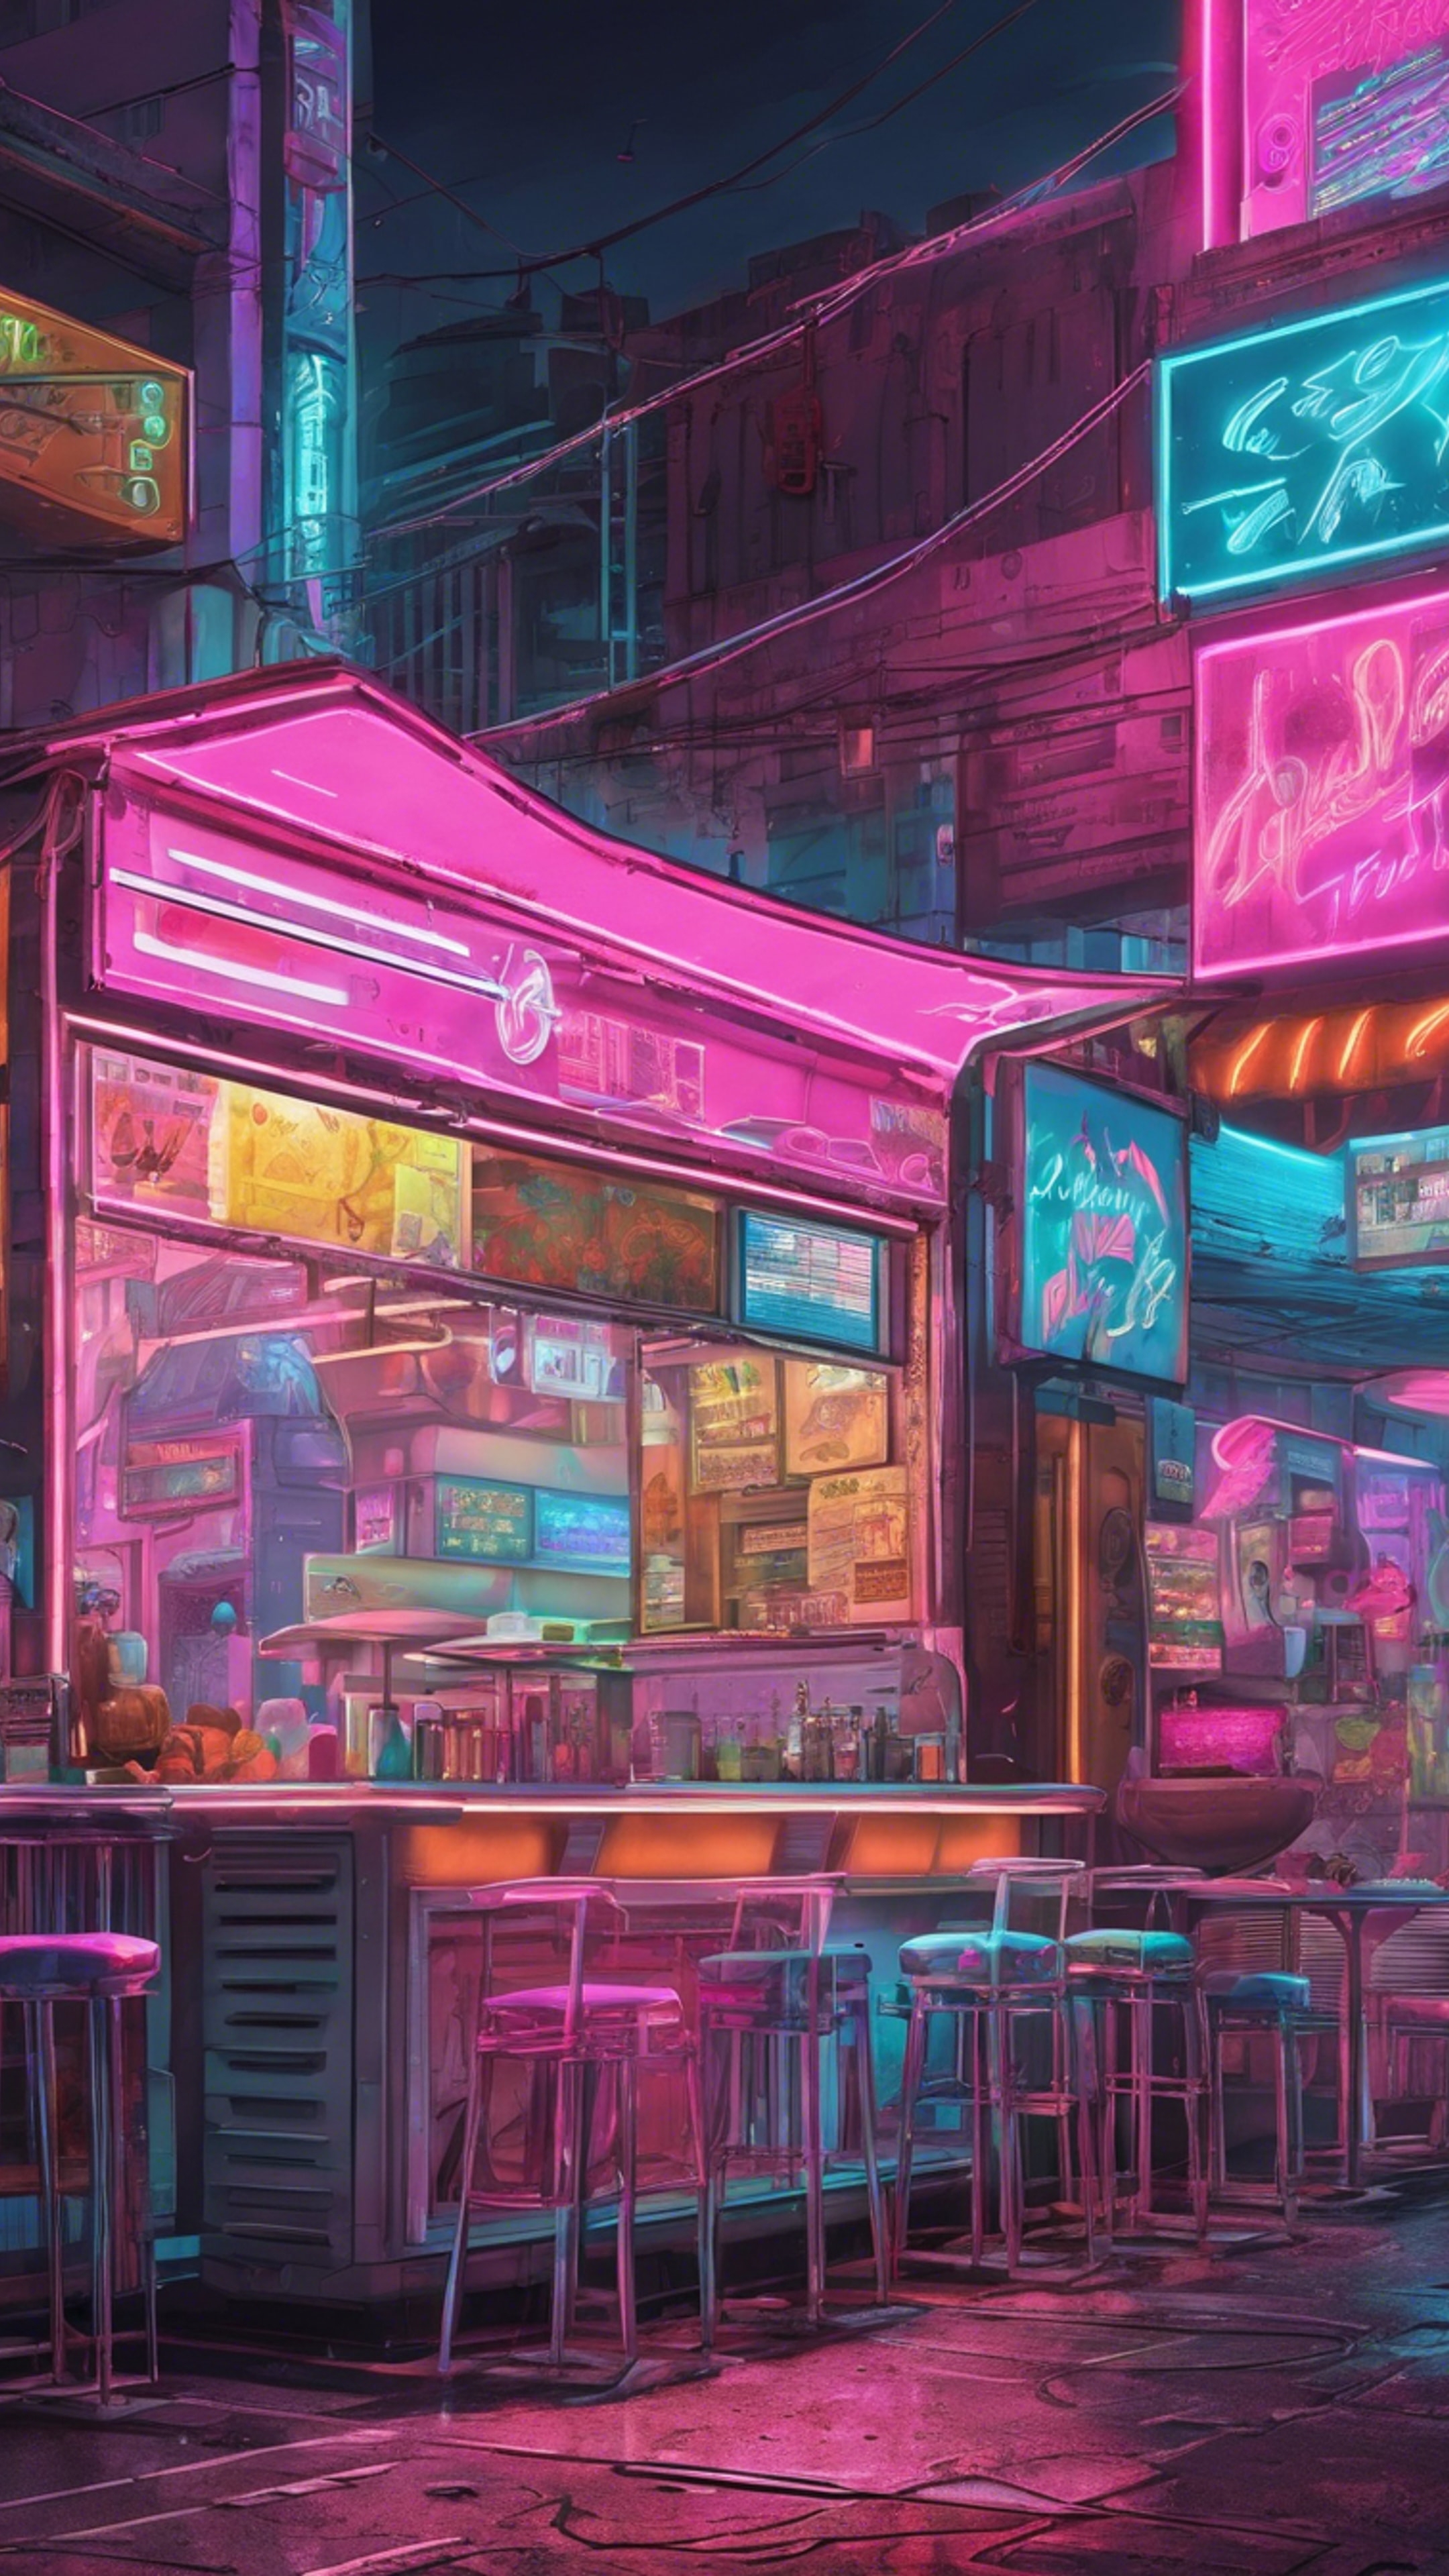 Night scene in a city where cyberpunk meets pastel at a popular street food stall. Обои[607f993b19214cf28e30]